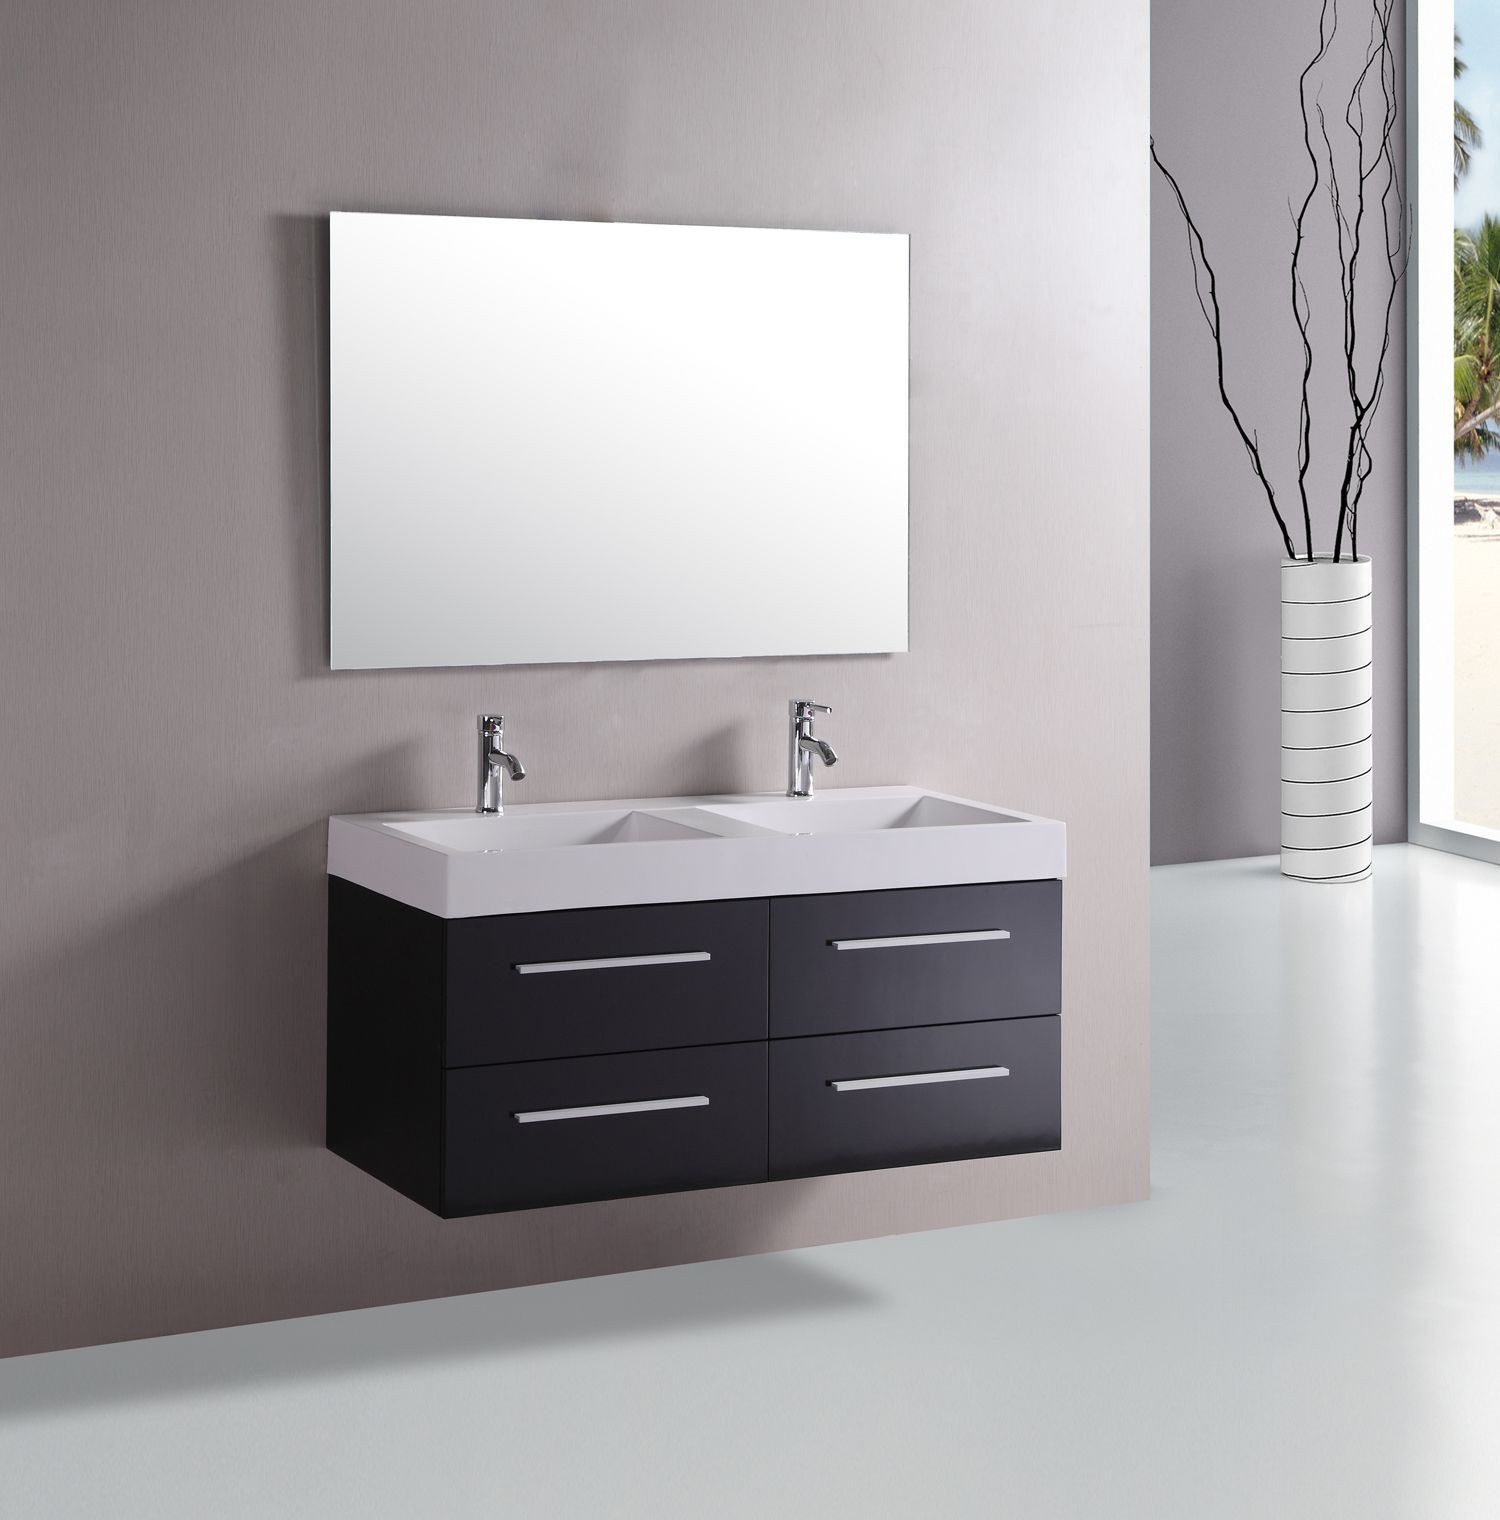 Floating Bathroom Mirror
 Floating Bathroom Vanity in Modern Design for Your Lovely